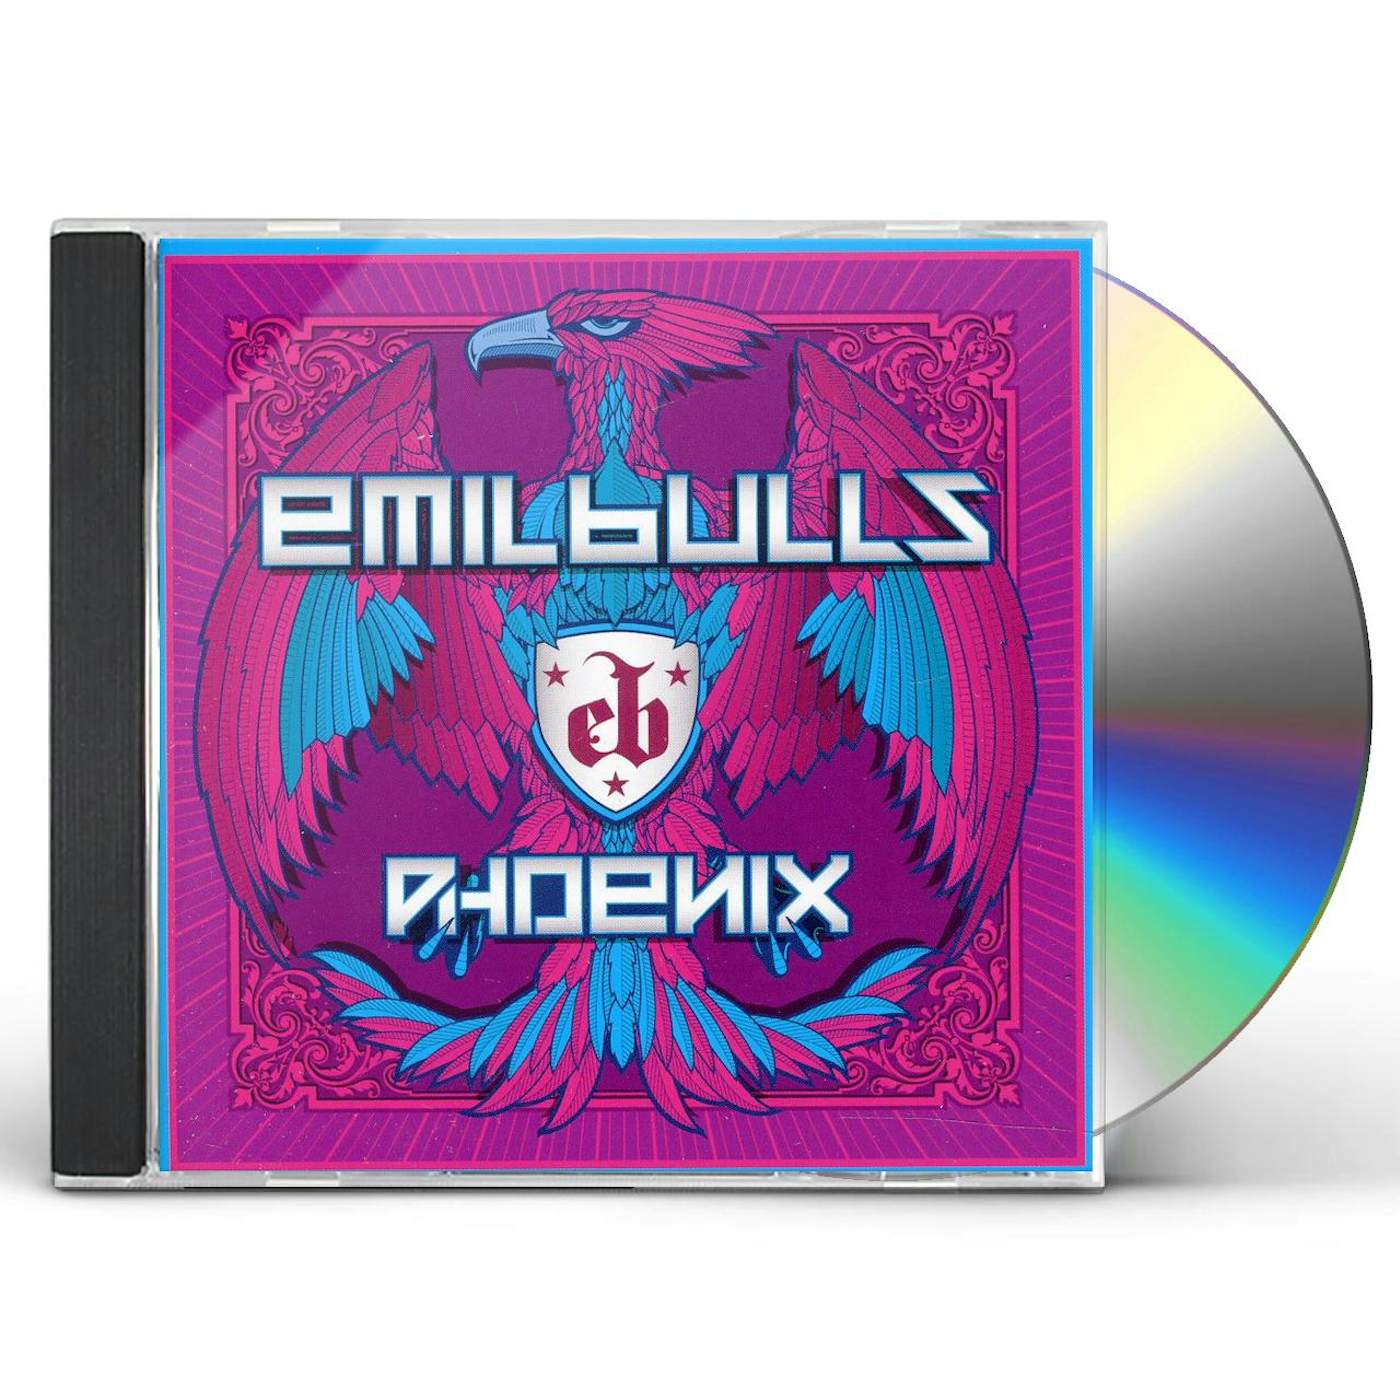 Emil Bulls PHOENIX CD